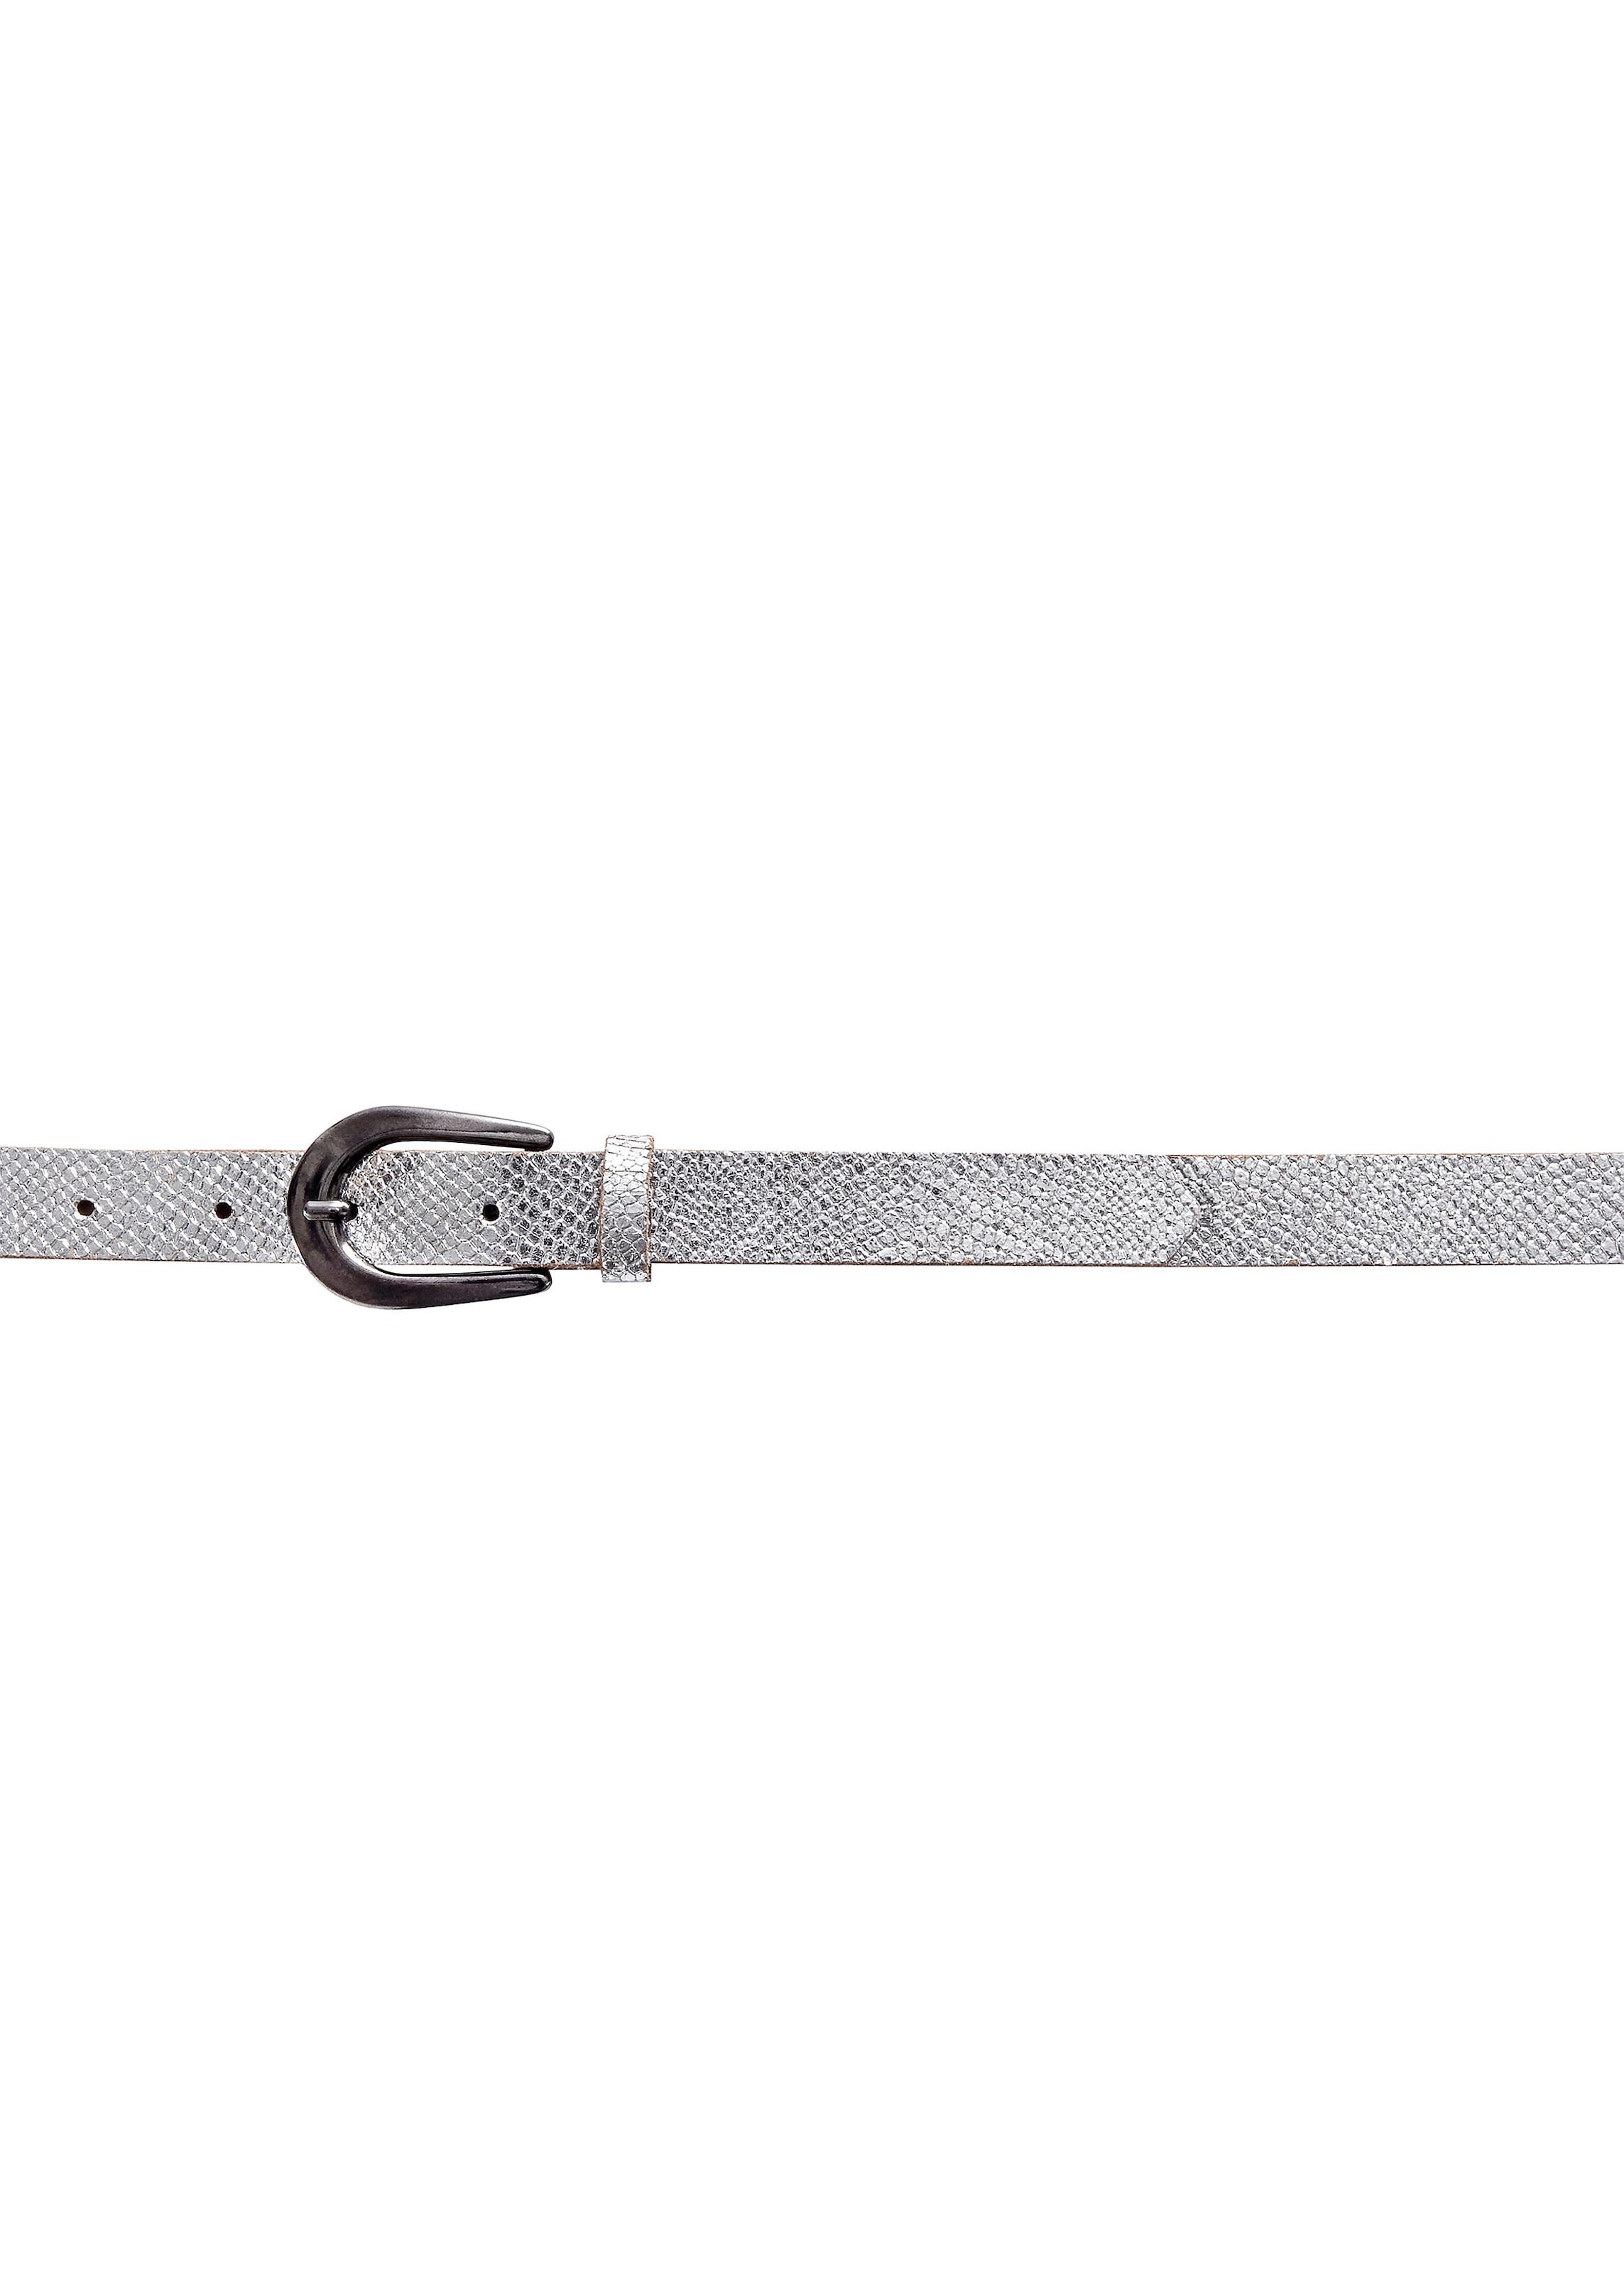 LASCANA Ledergürtel, in Metallic-Snake-Optik, Hüftgürtel für Hosen, Jeans & Kleider